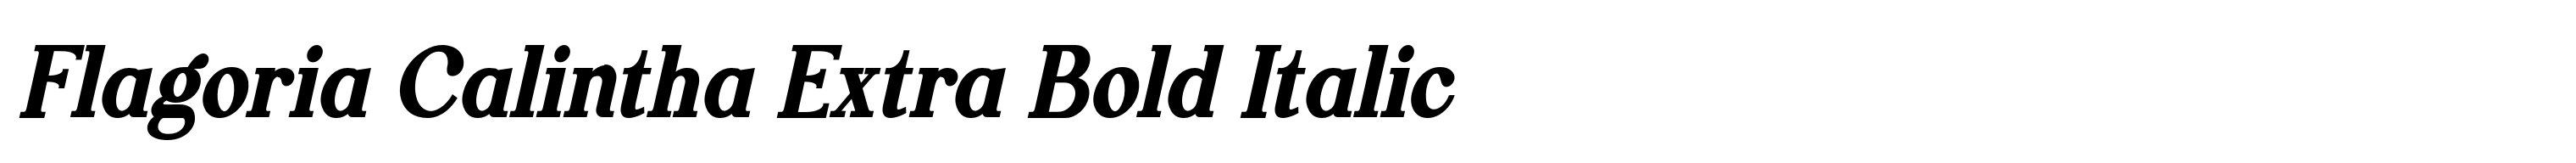 Flagoria Calintha Extra Bold Italic